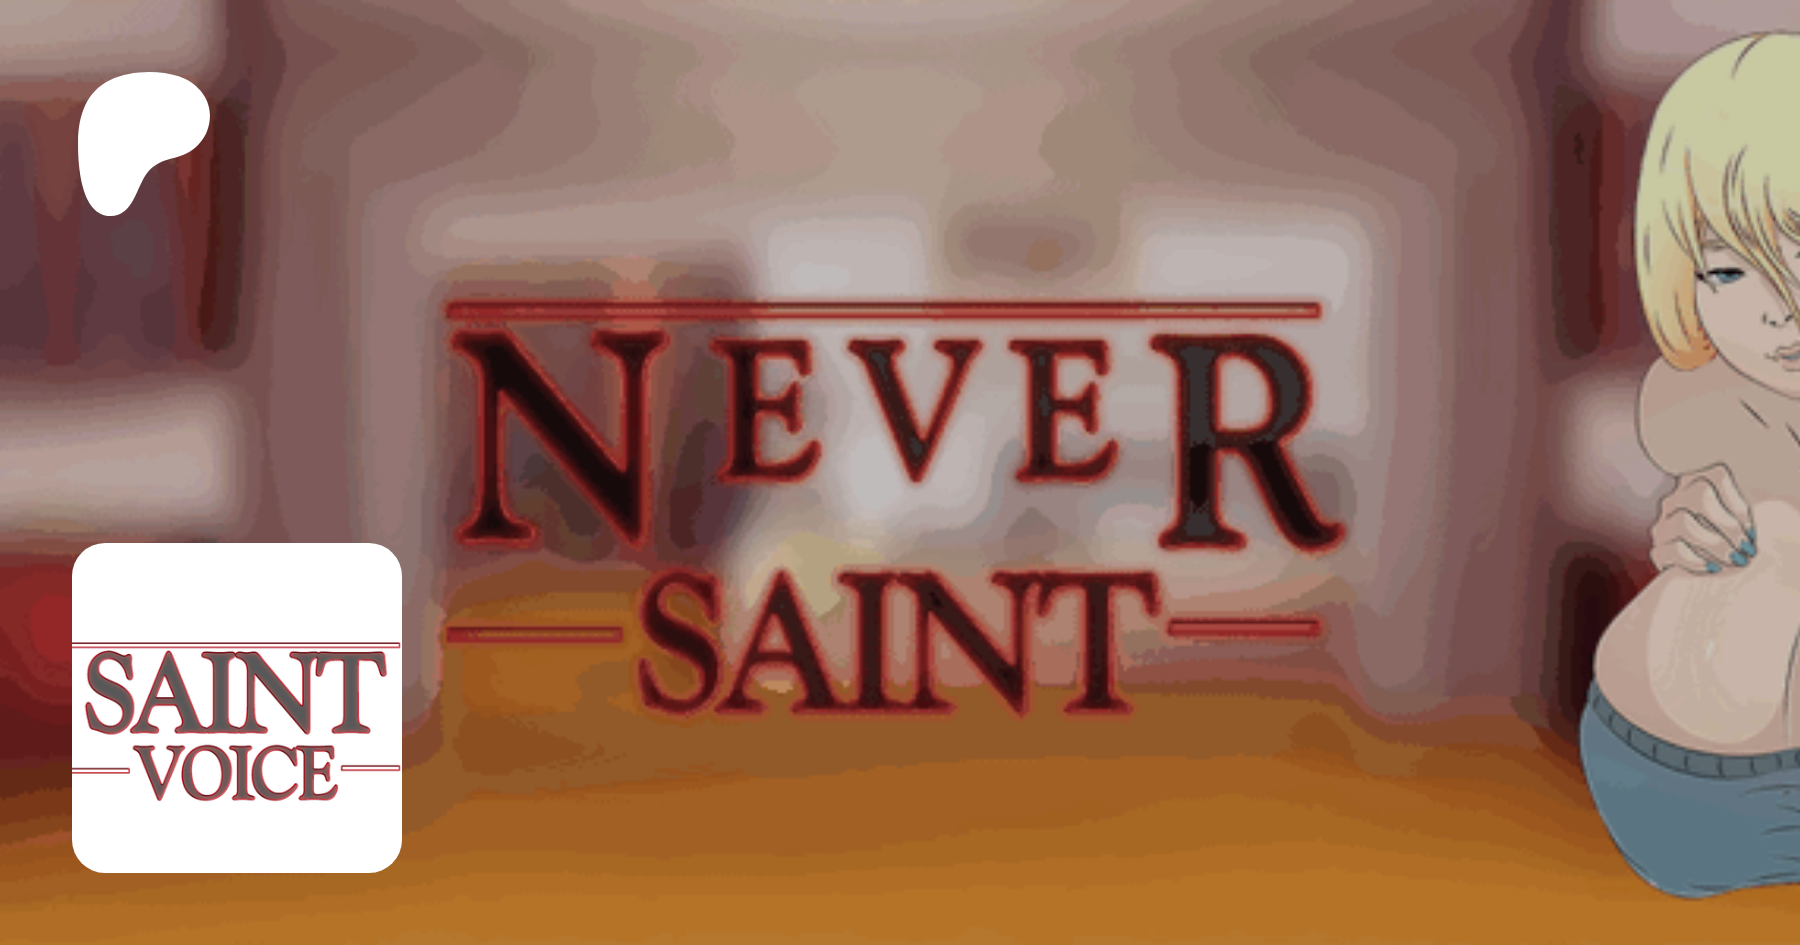 Never saint extended version